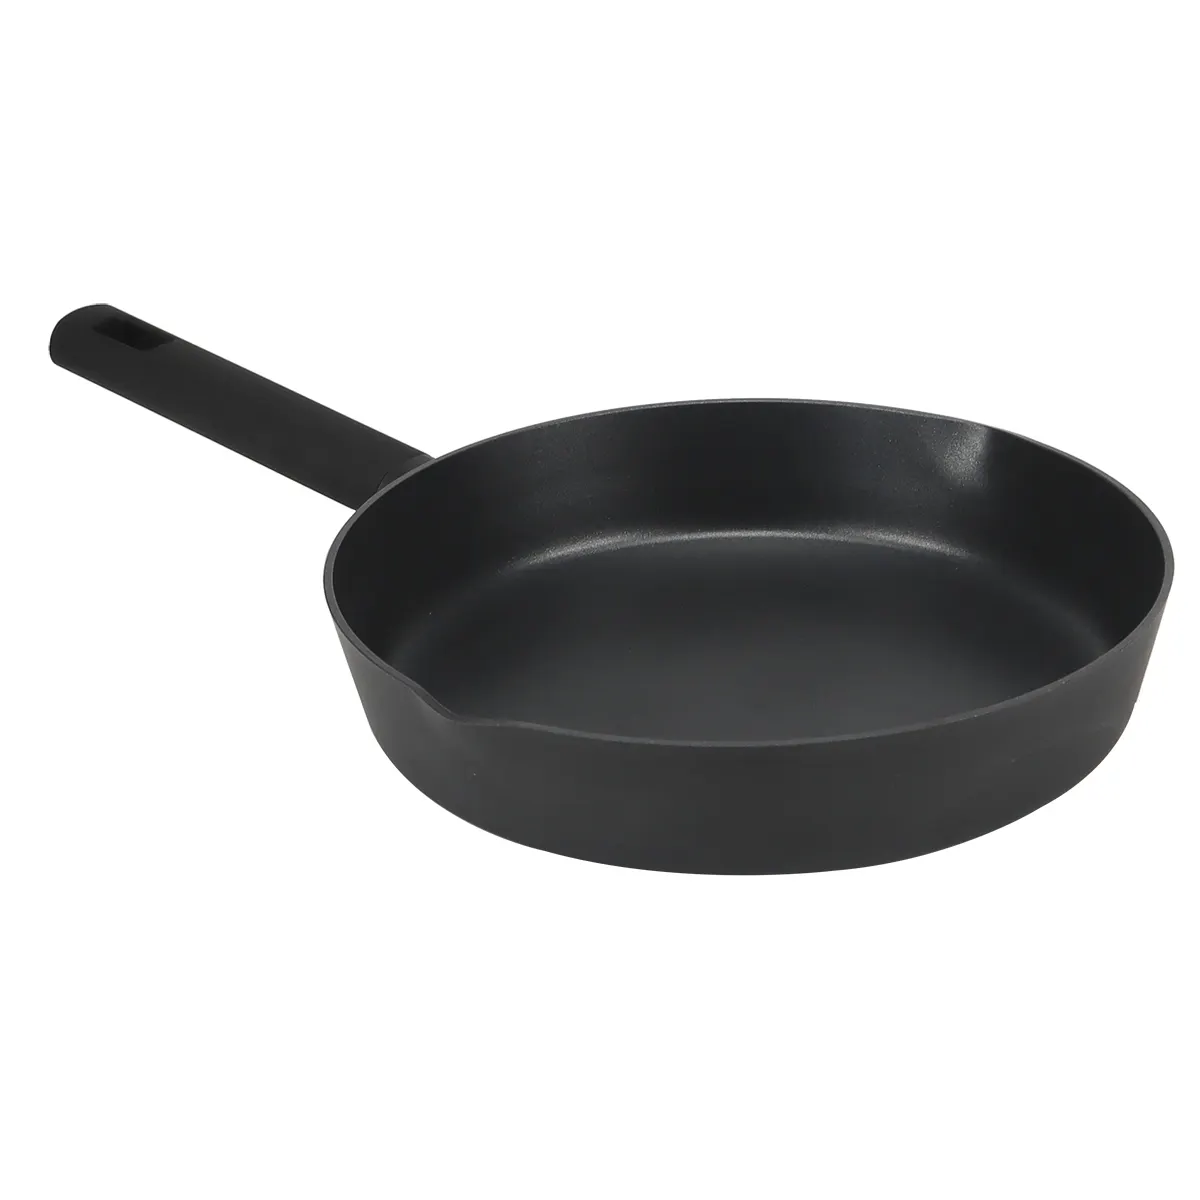 Nonstick cooking pan aluminum deep frying pan big bottom size matt black pans with two oil mouth